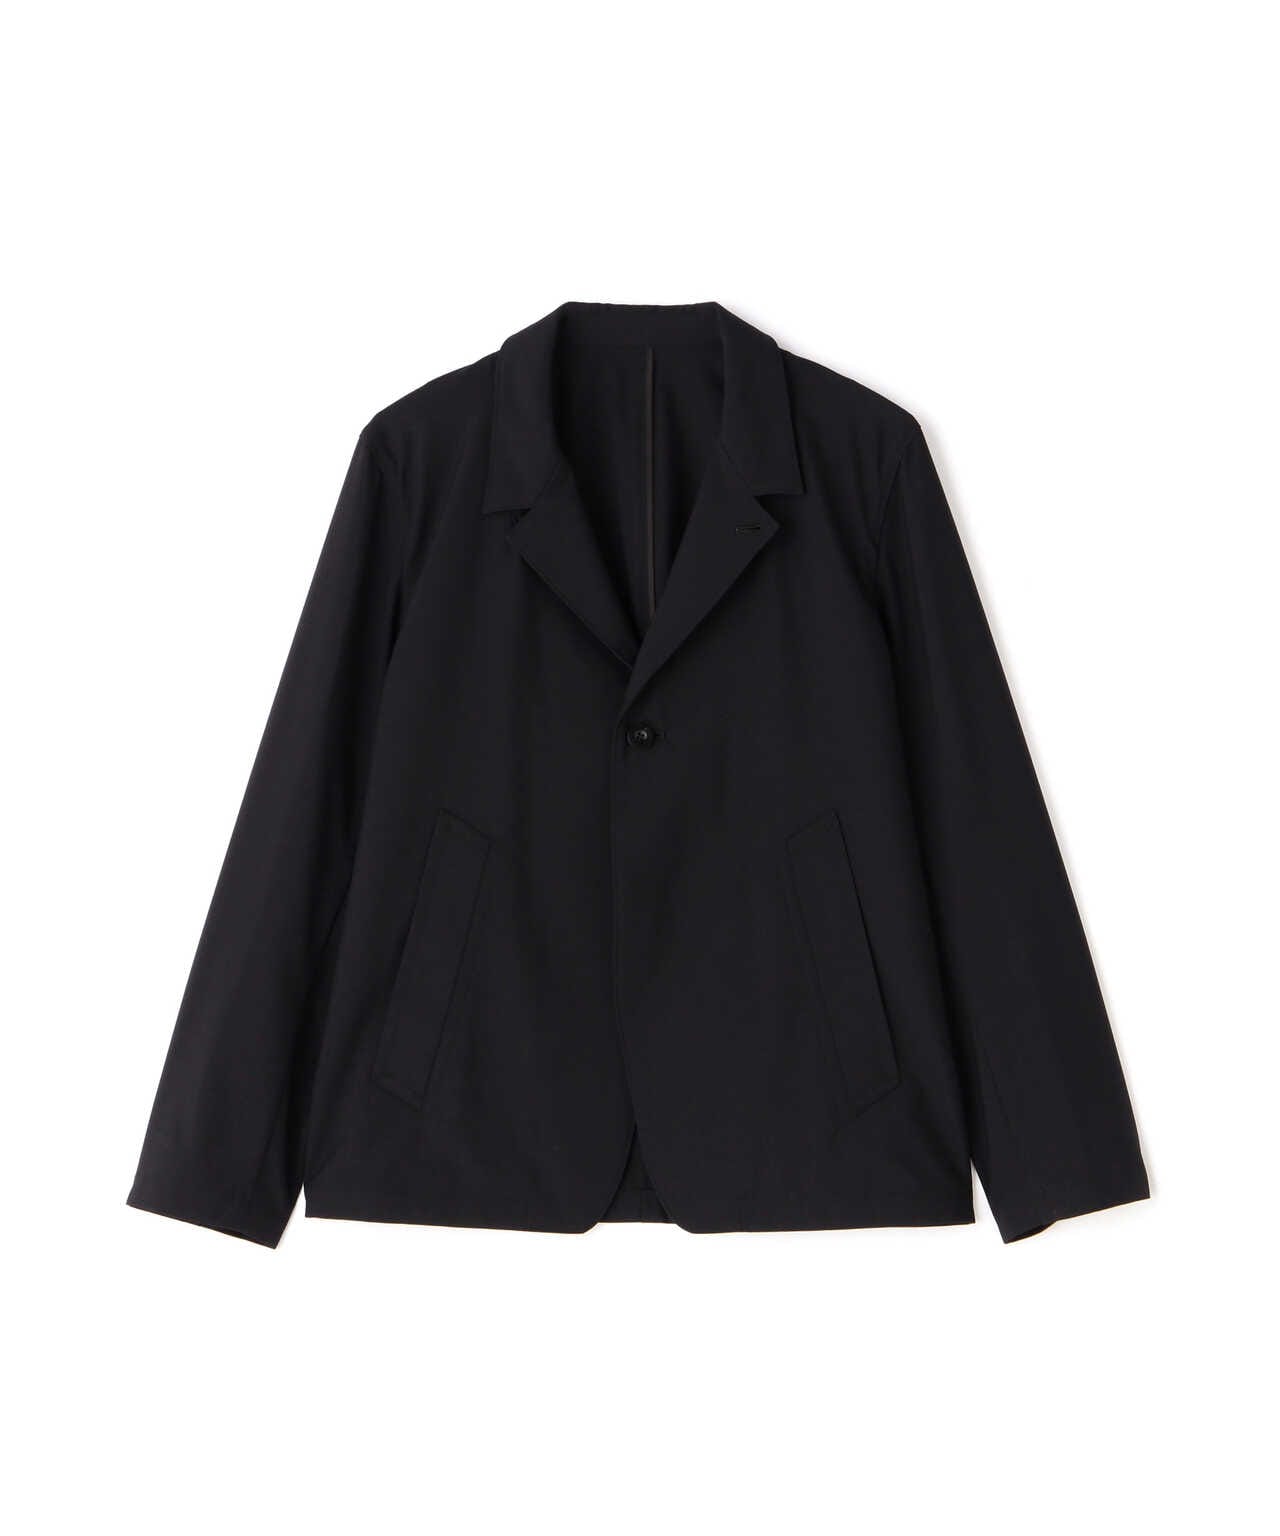 BLACKEYEPATCH【新品】 IRENISA.relaxed tailored jacket